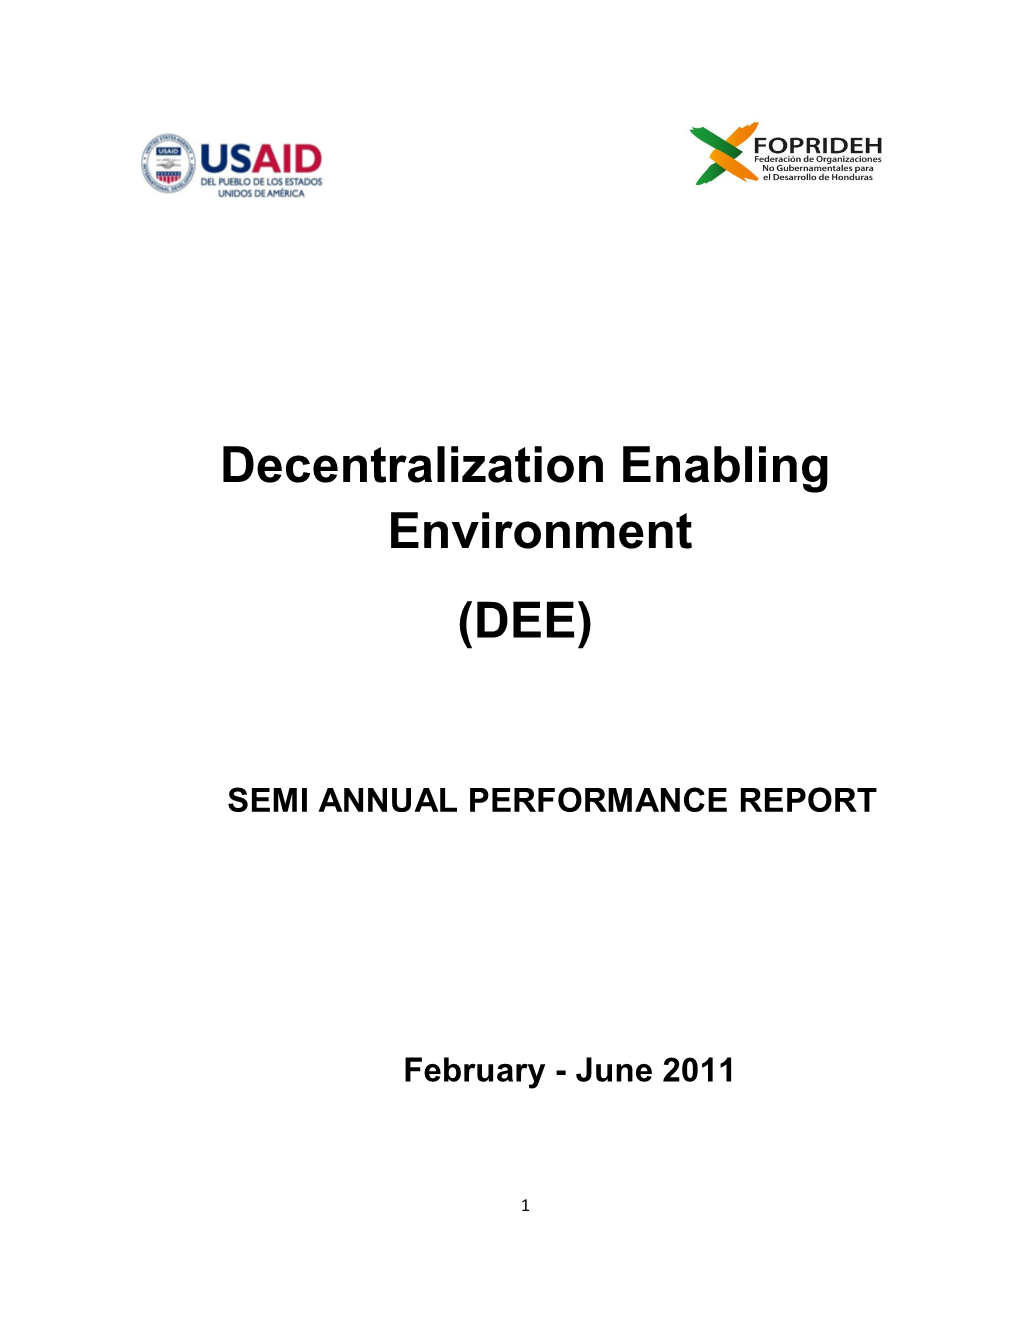 Decentralization Enabling Environment (DEE)